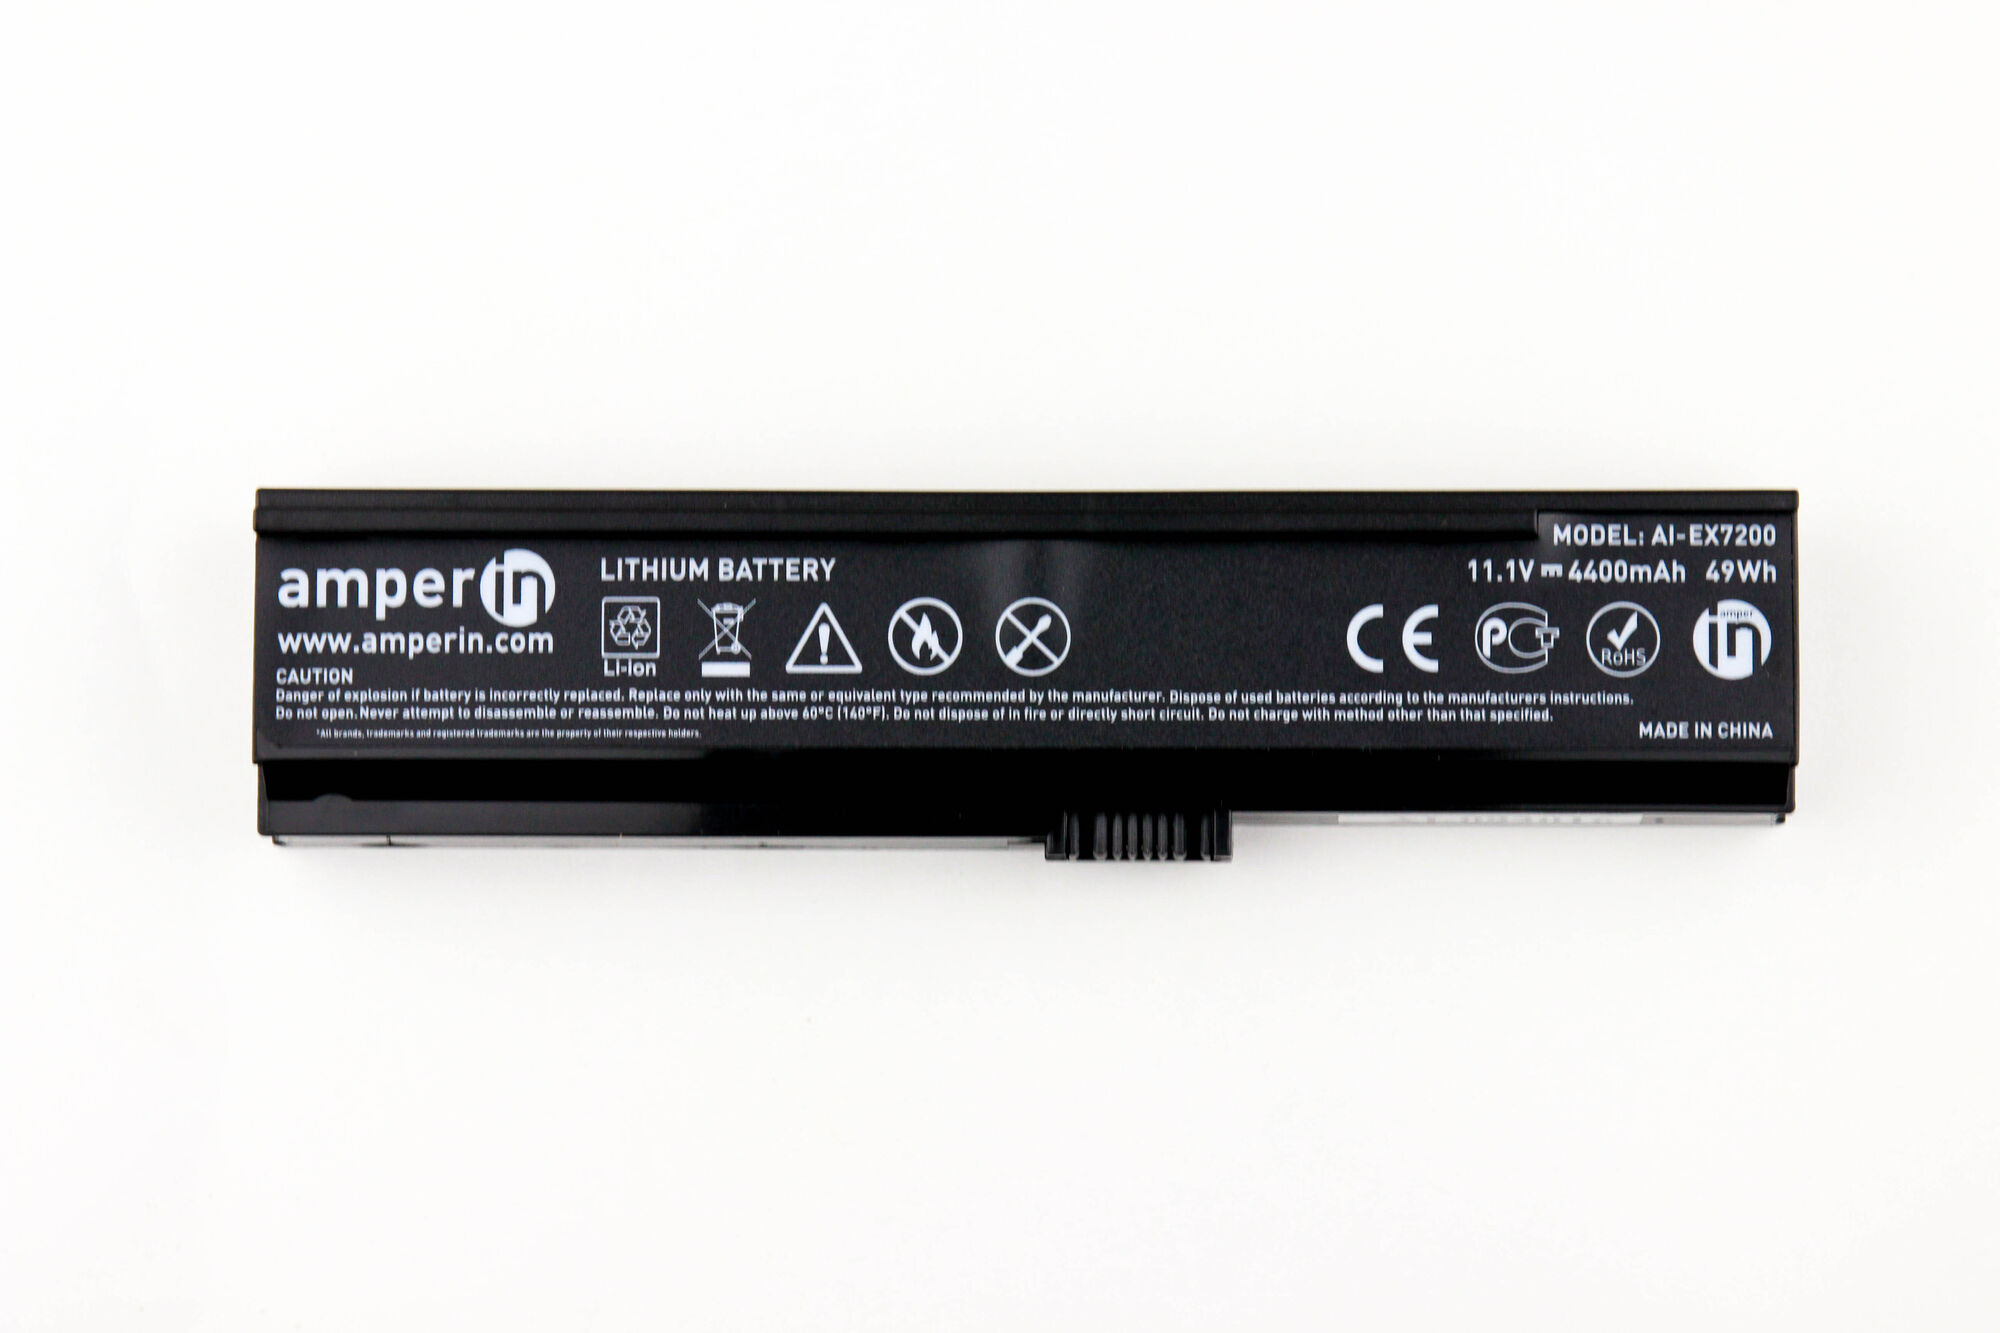 Аккумулятор для Acer TM 7220 (11.1V 4400mAh) Amperin p/n: AI-EX7200